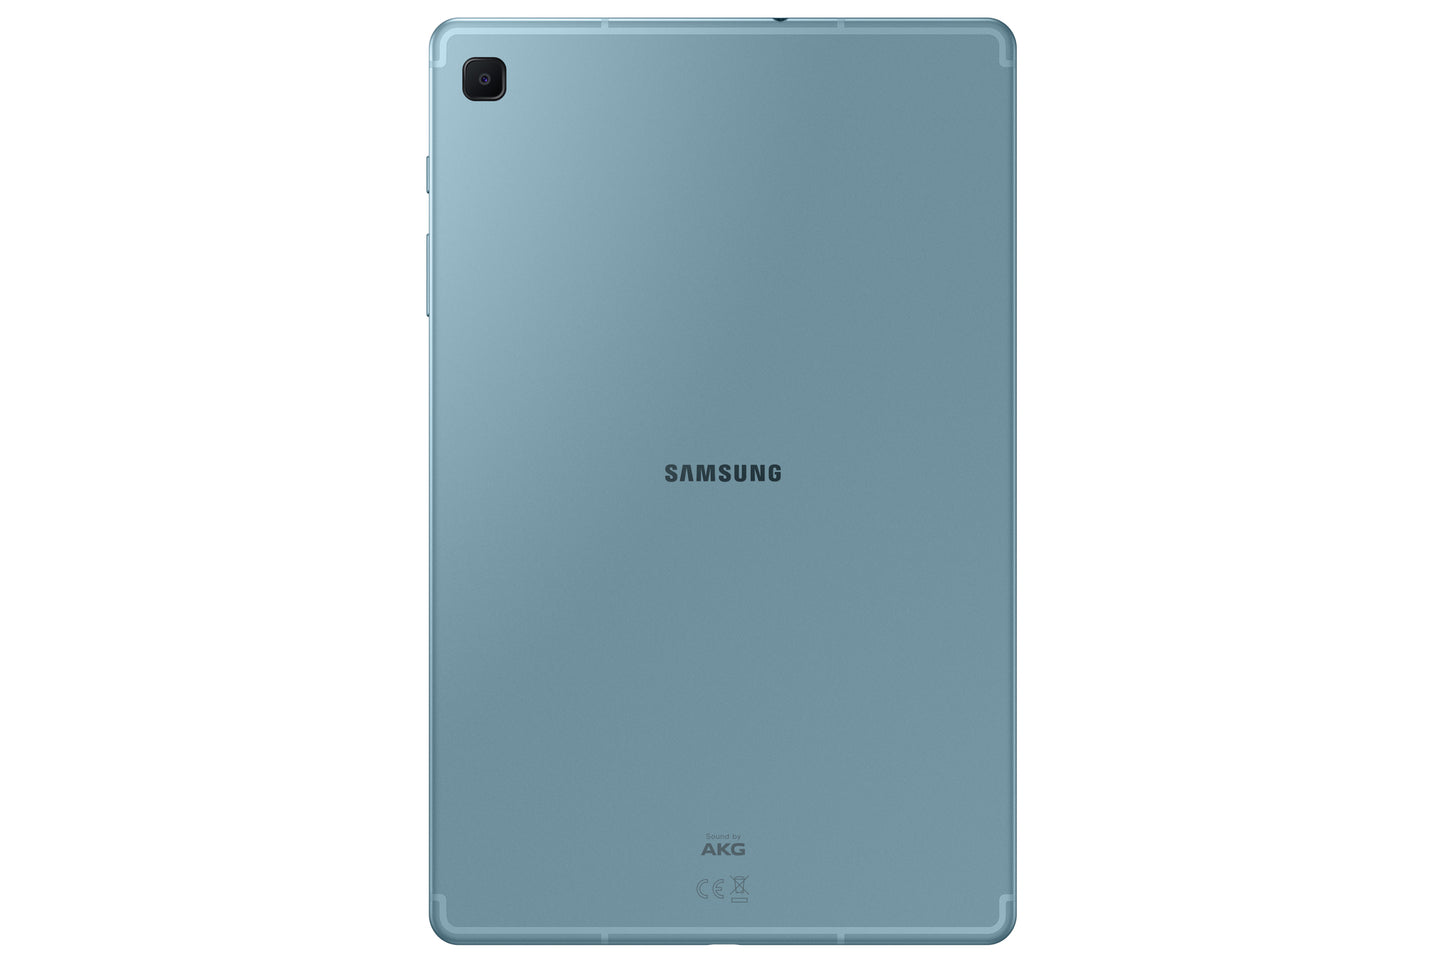 (Open Box) Samsung Galaxy Tab S6 Lite Wi-Fi 64GB 10.4-in Tablet - Angora Blue